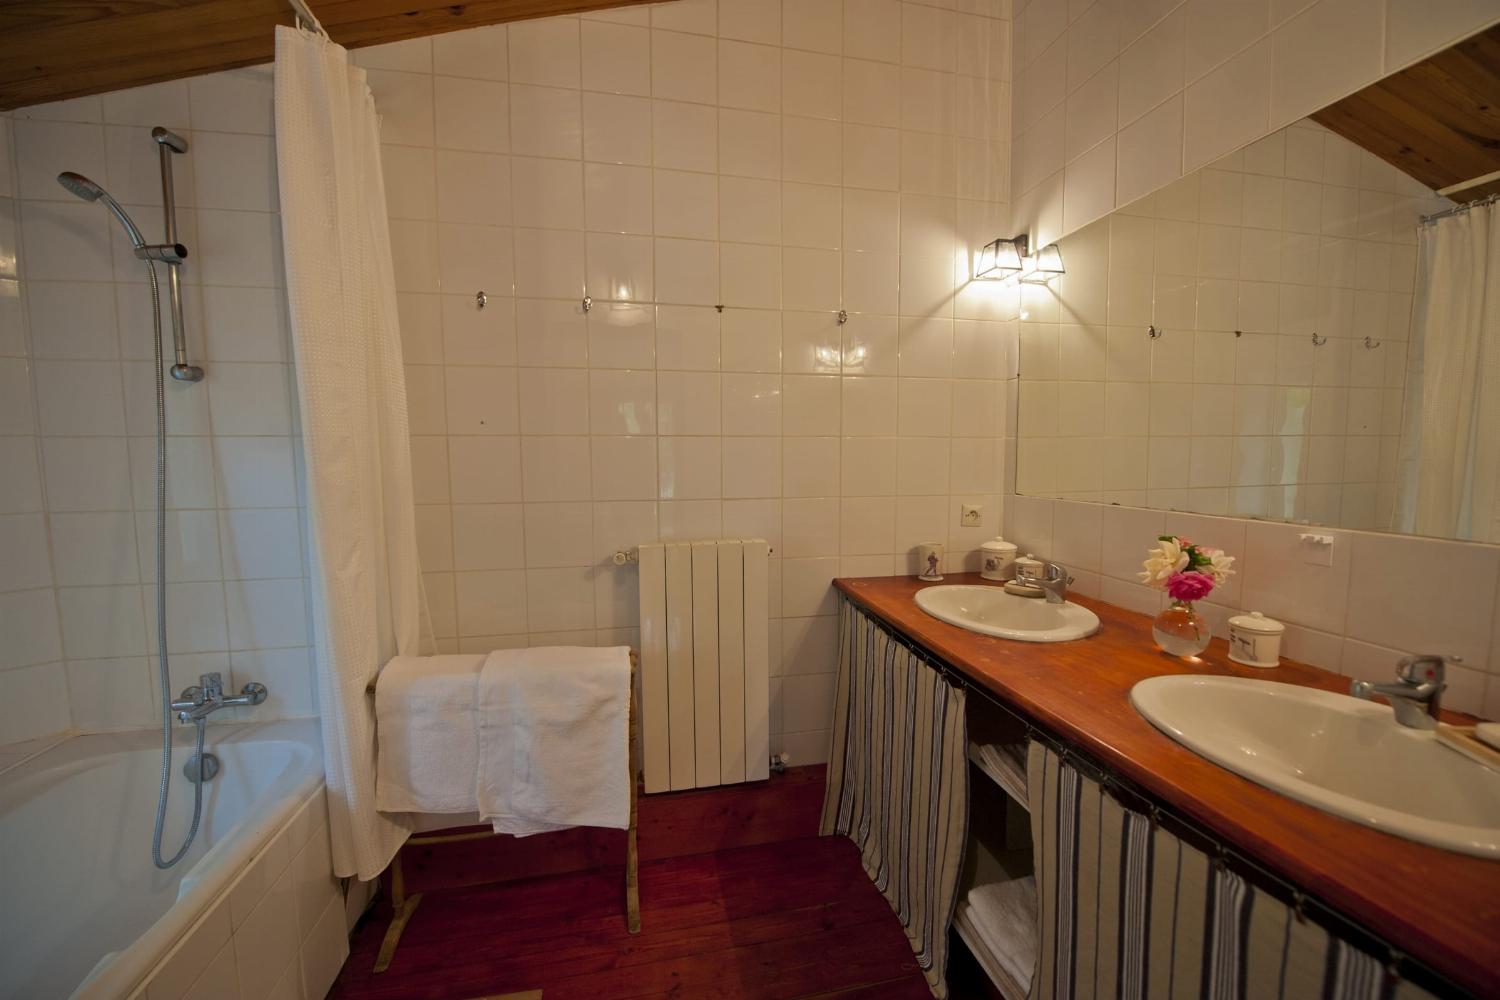 Bathroom | Rental home in Gironde